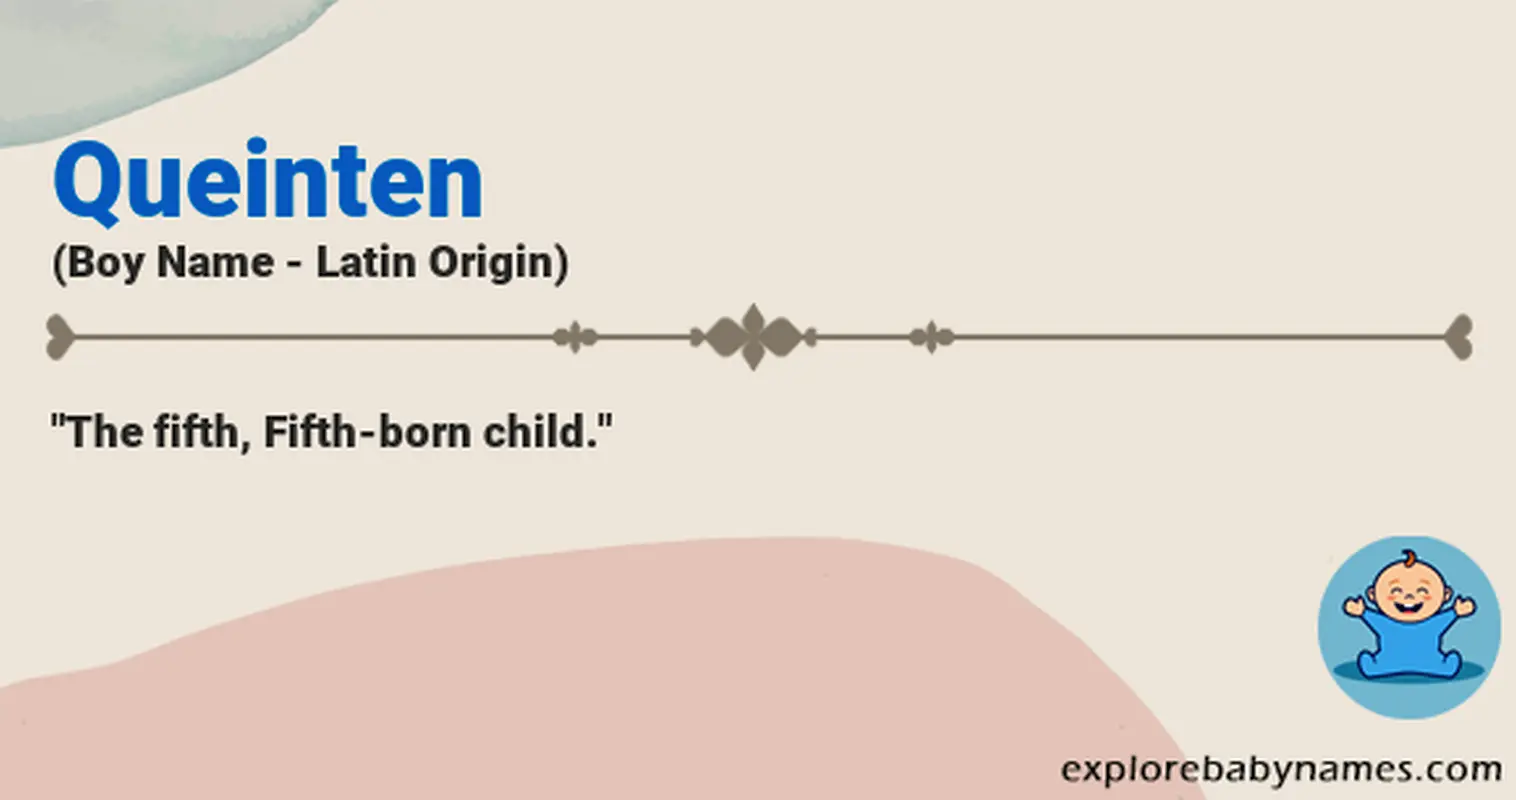 Meaning of Queinten